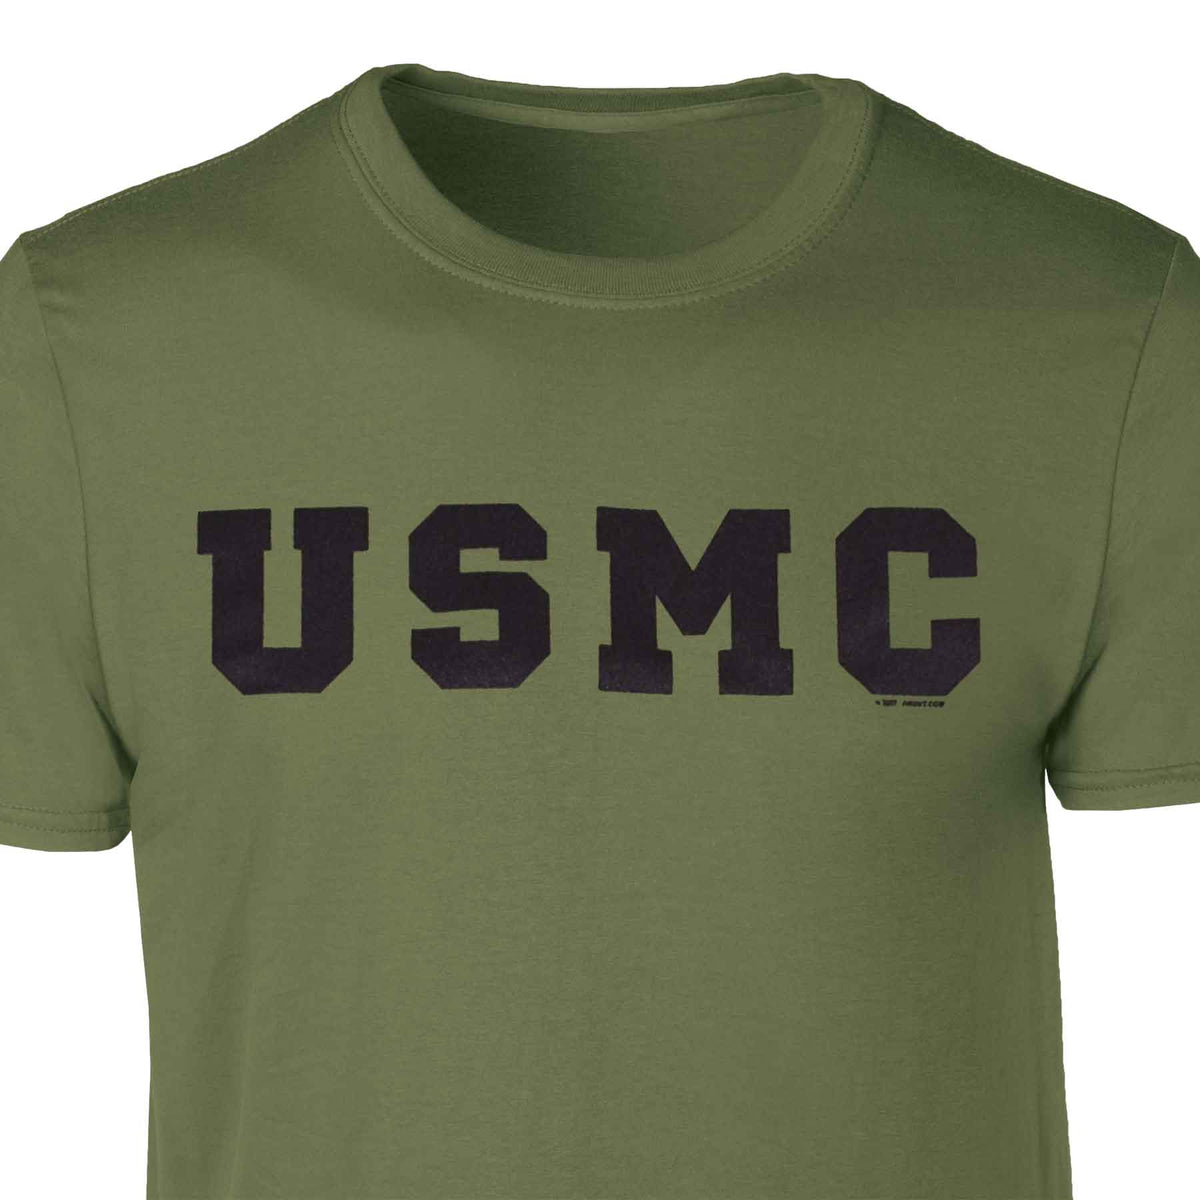 USMC Initials T-shirt Olive Drab Green - SGT GRIT